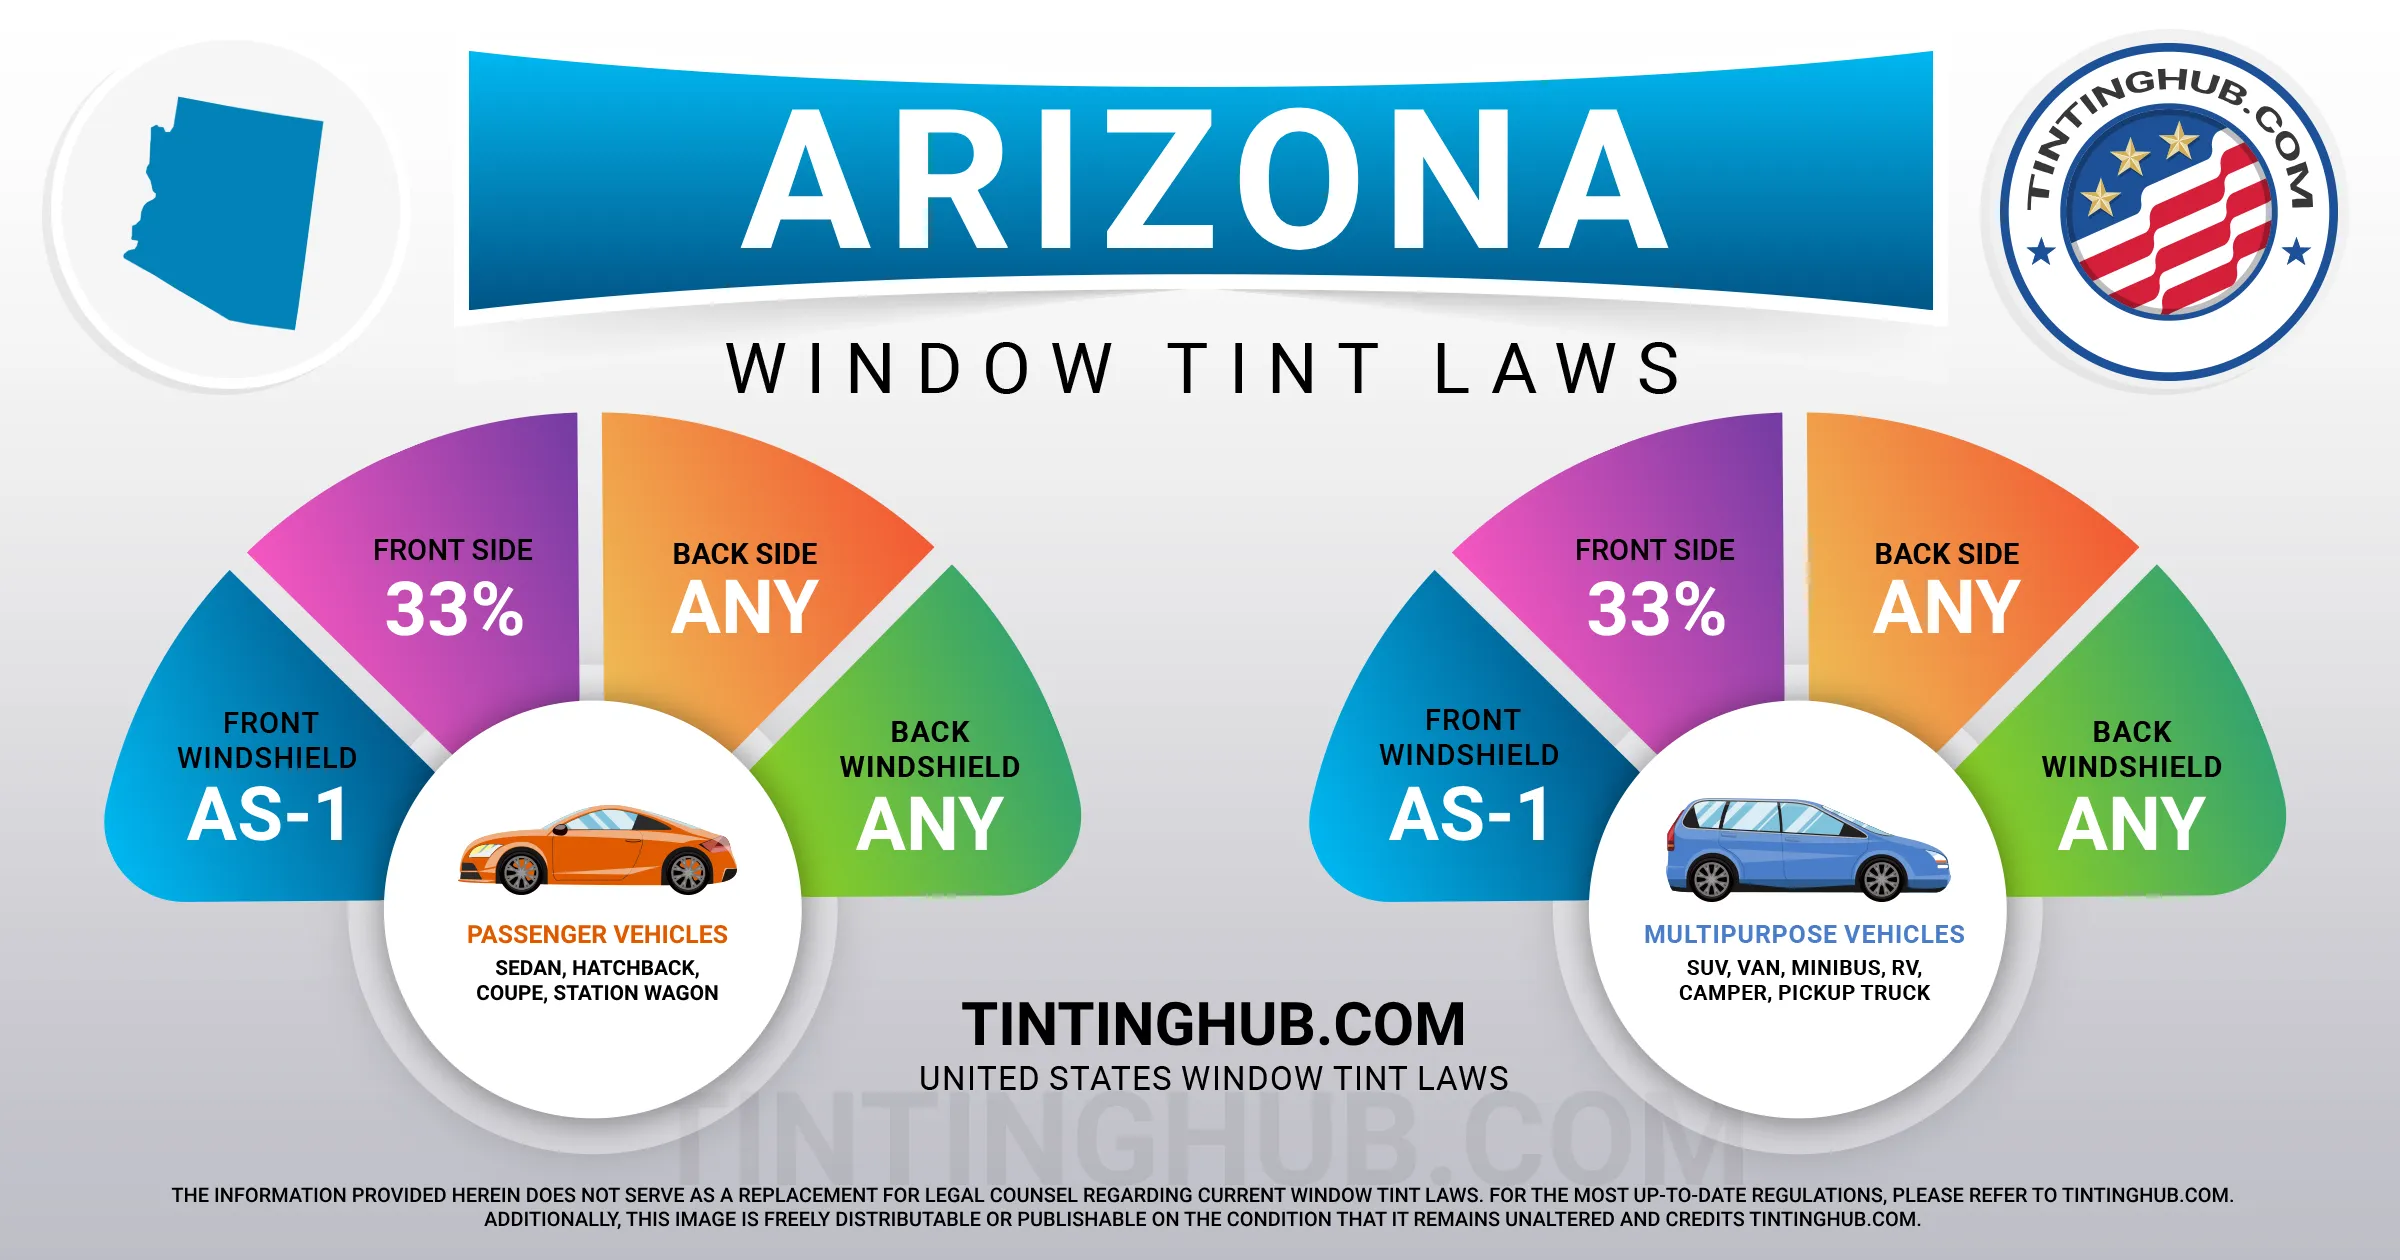 Arizona Automobile Window Tint Laws